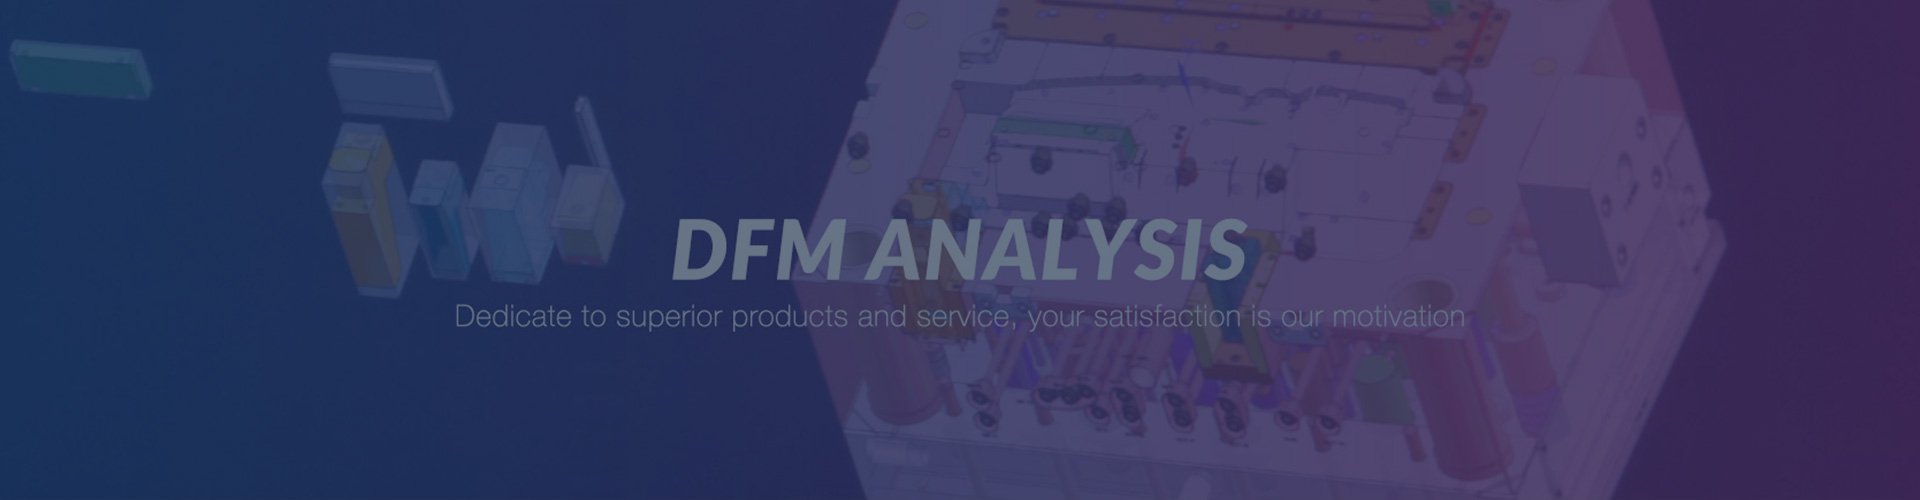 DFX-analysis-service